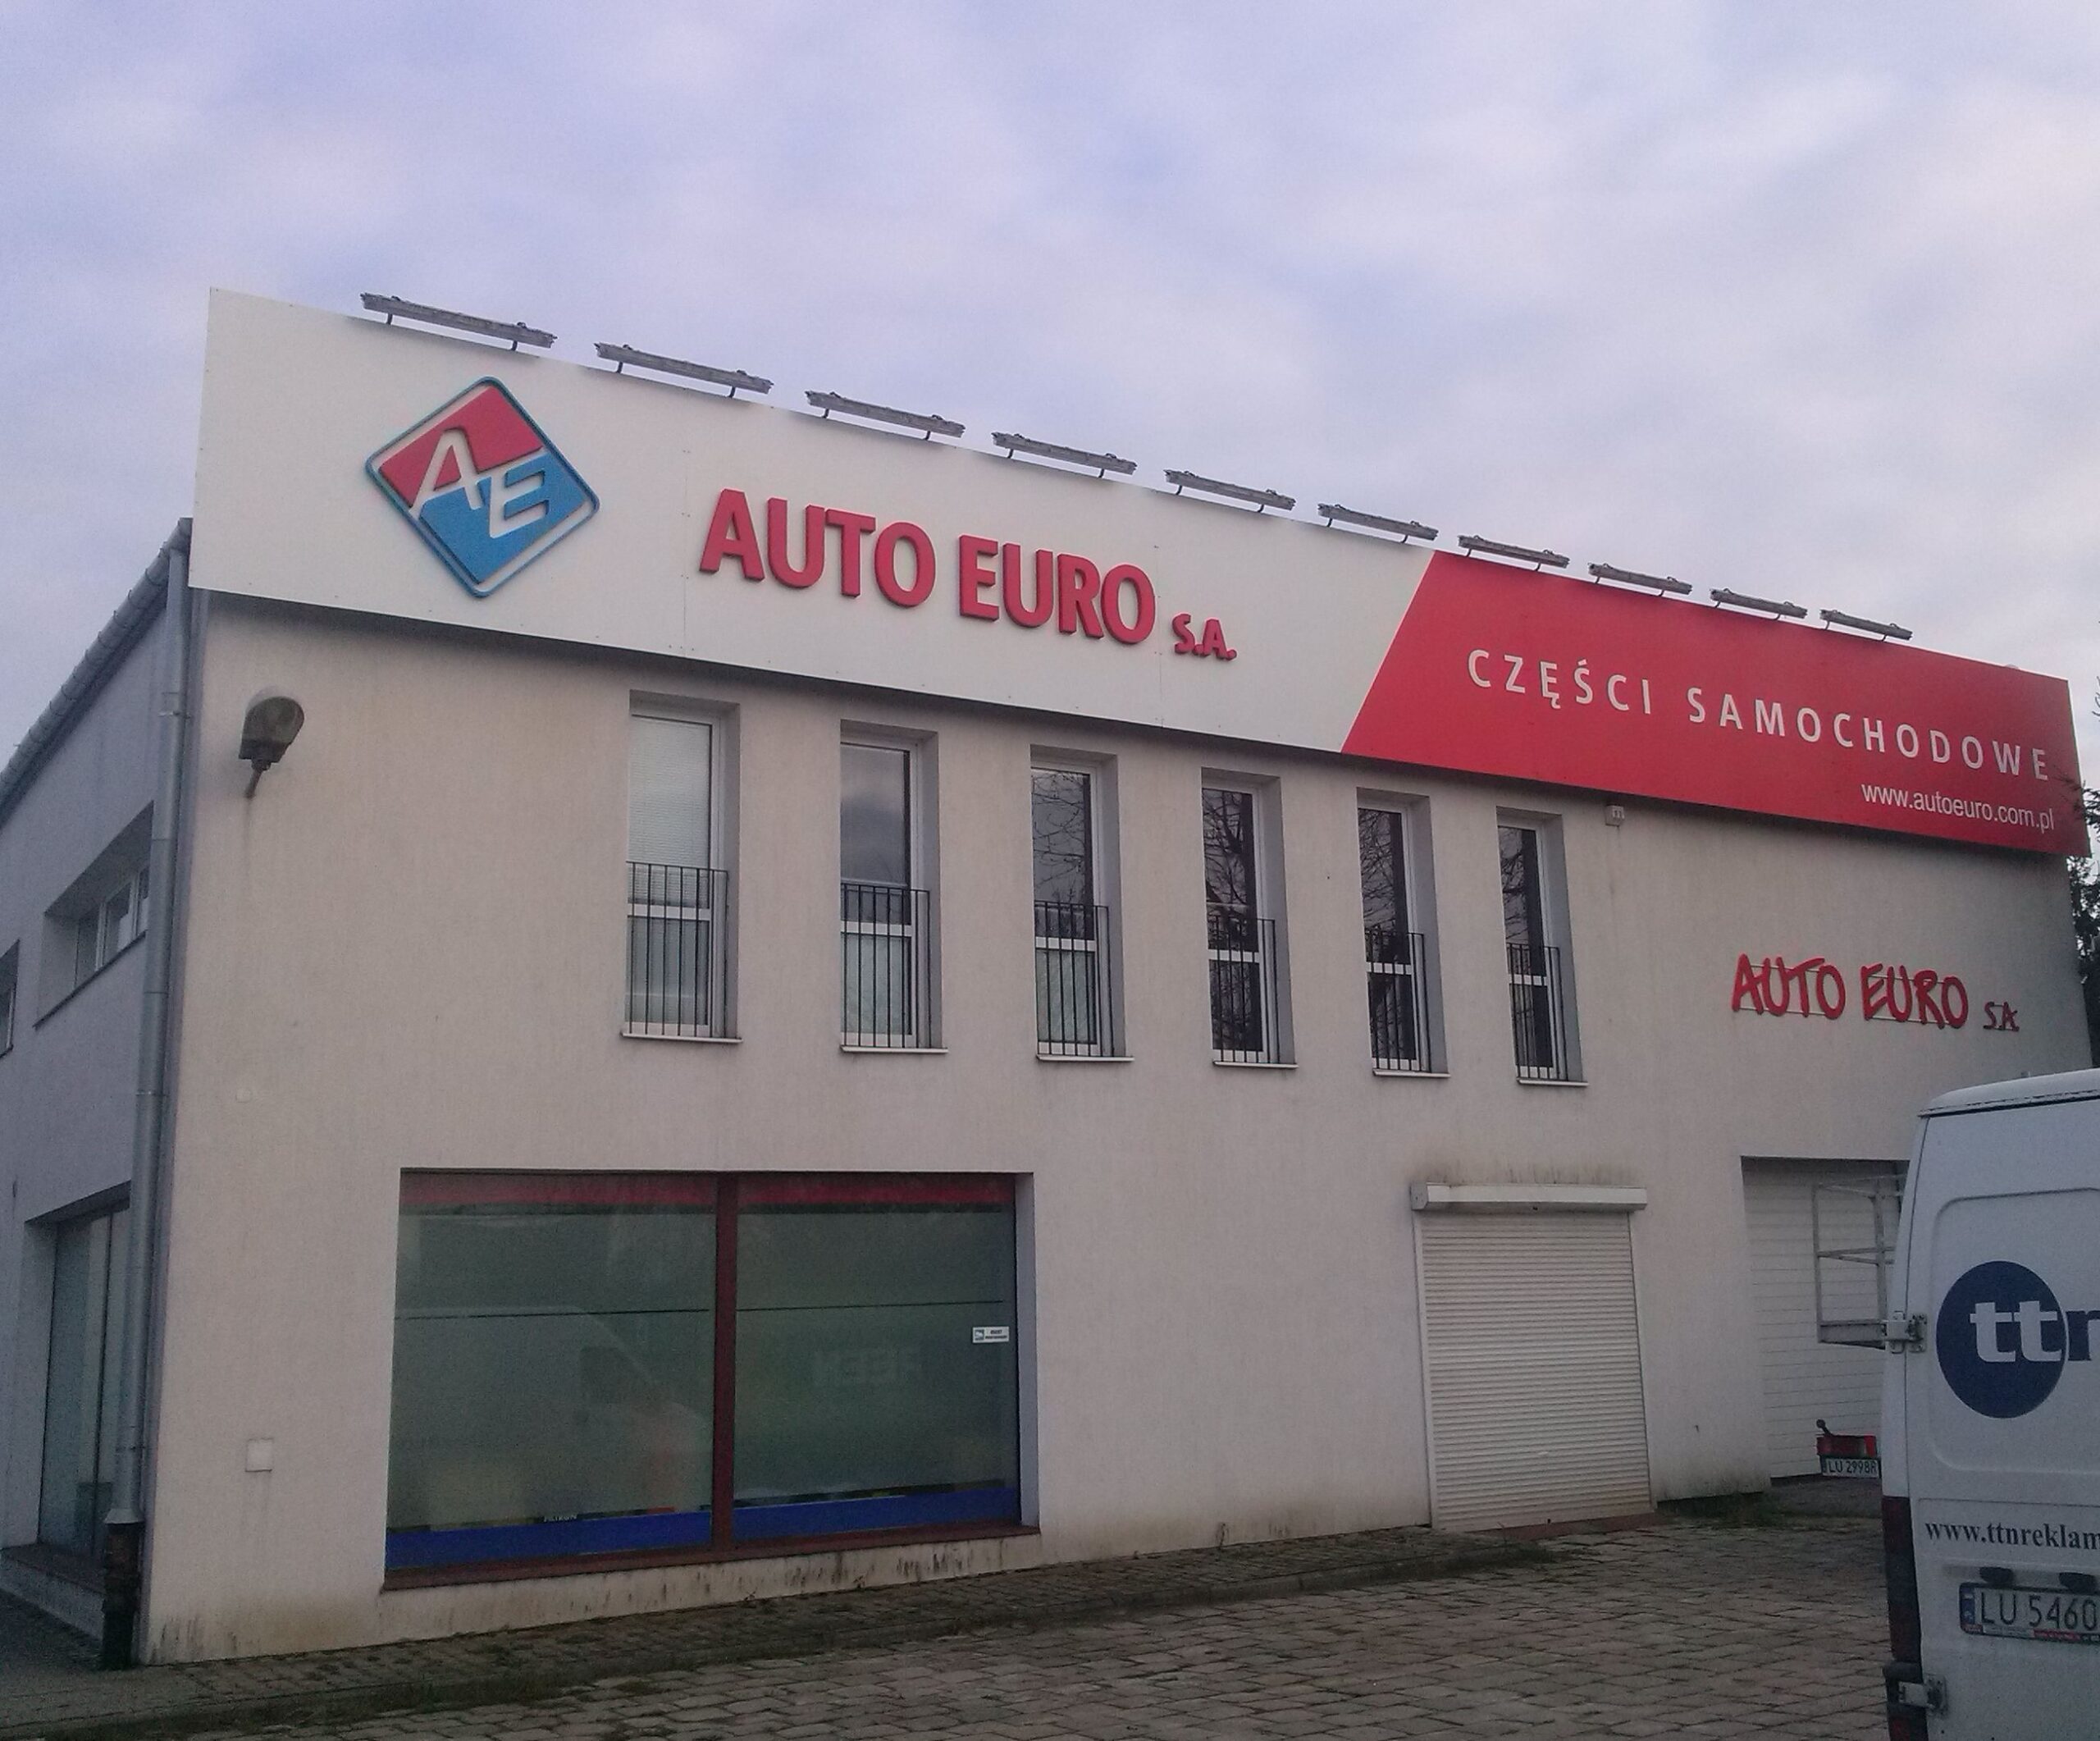 Auto Euro car shop - signboards billboards charts